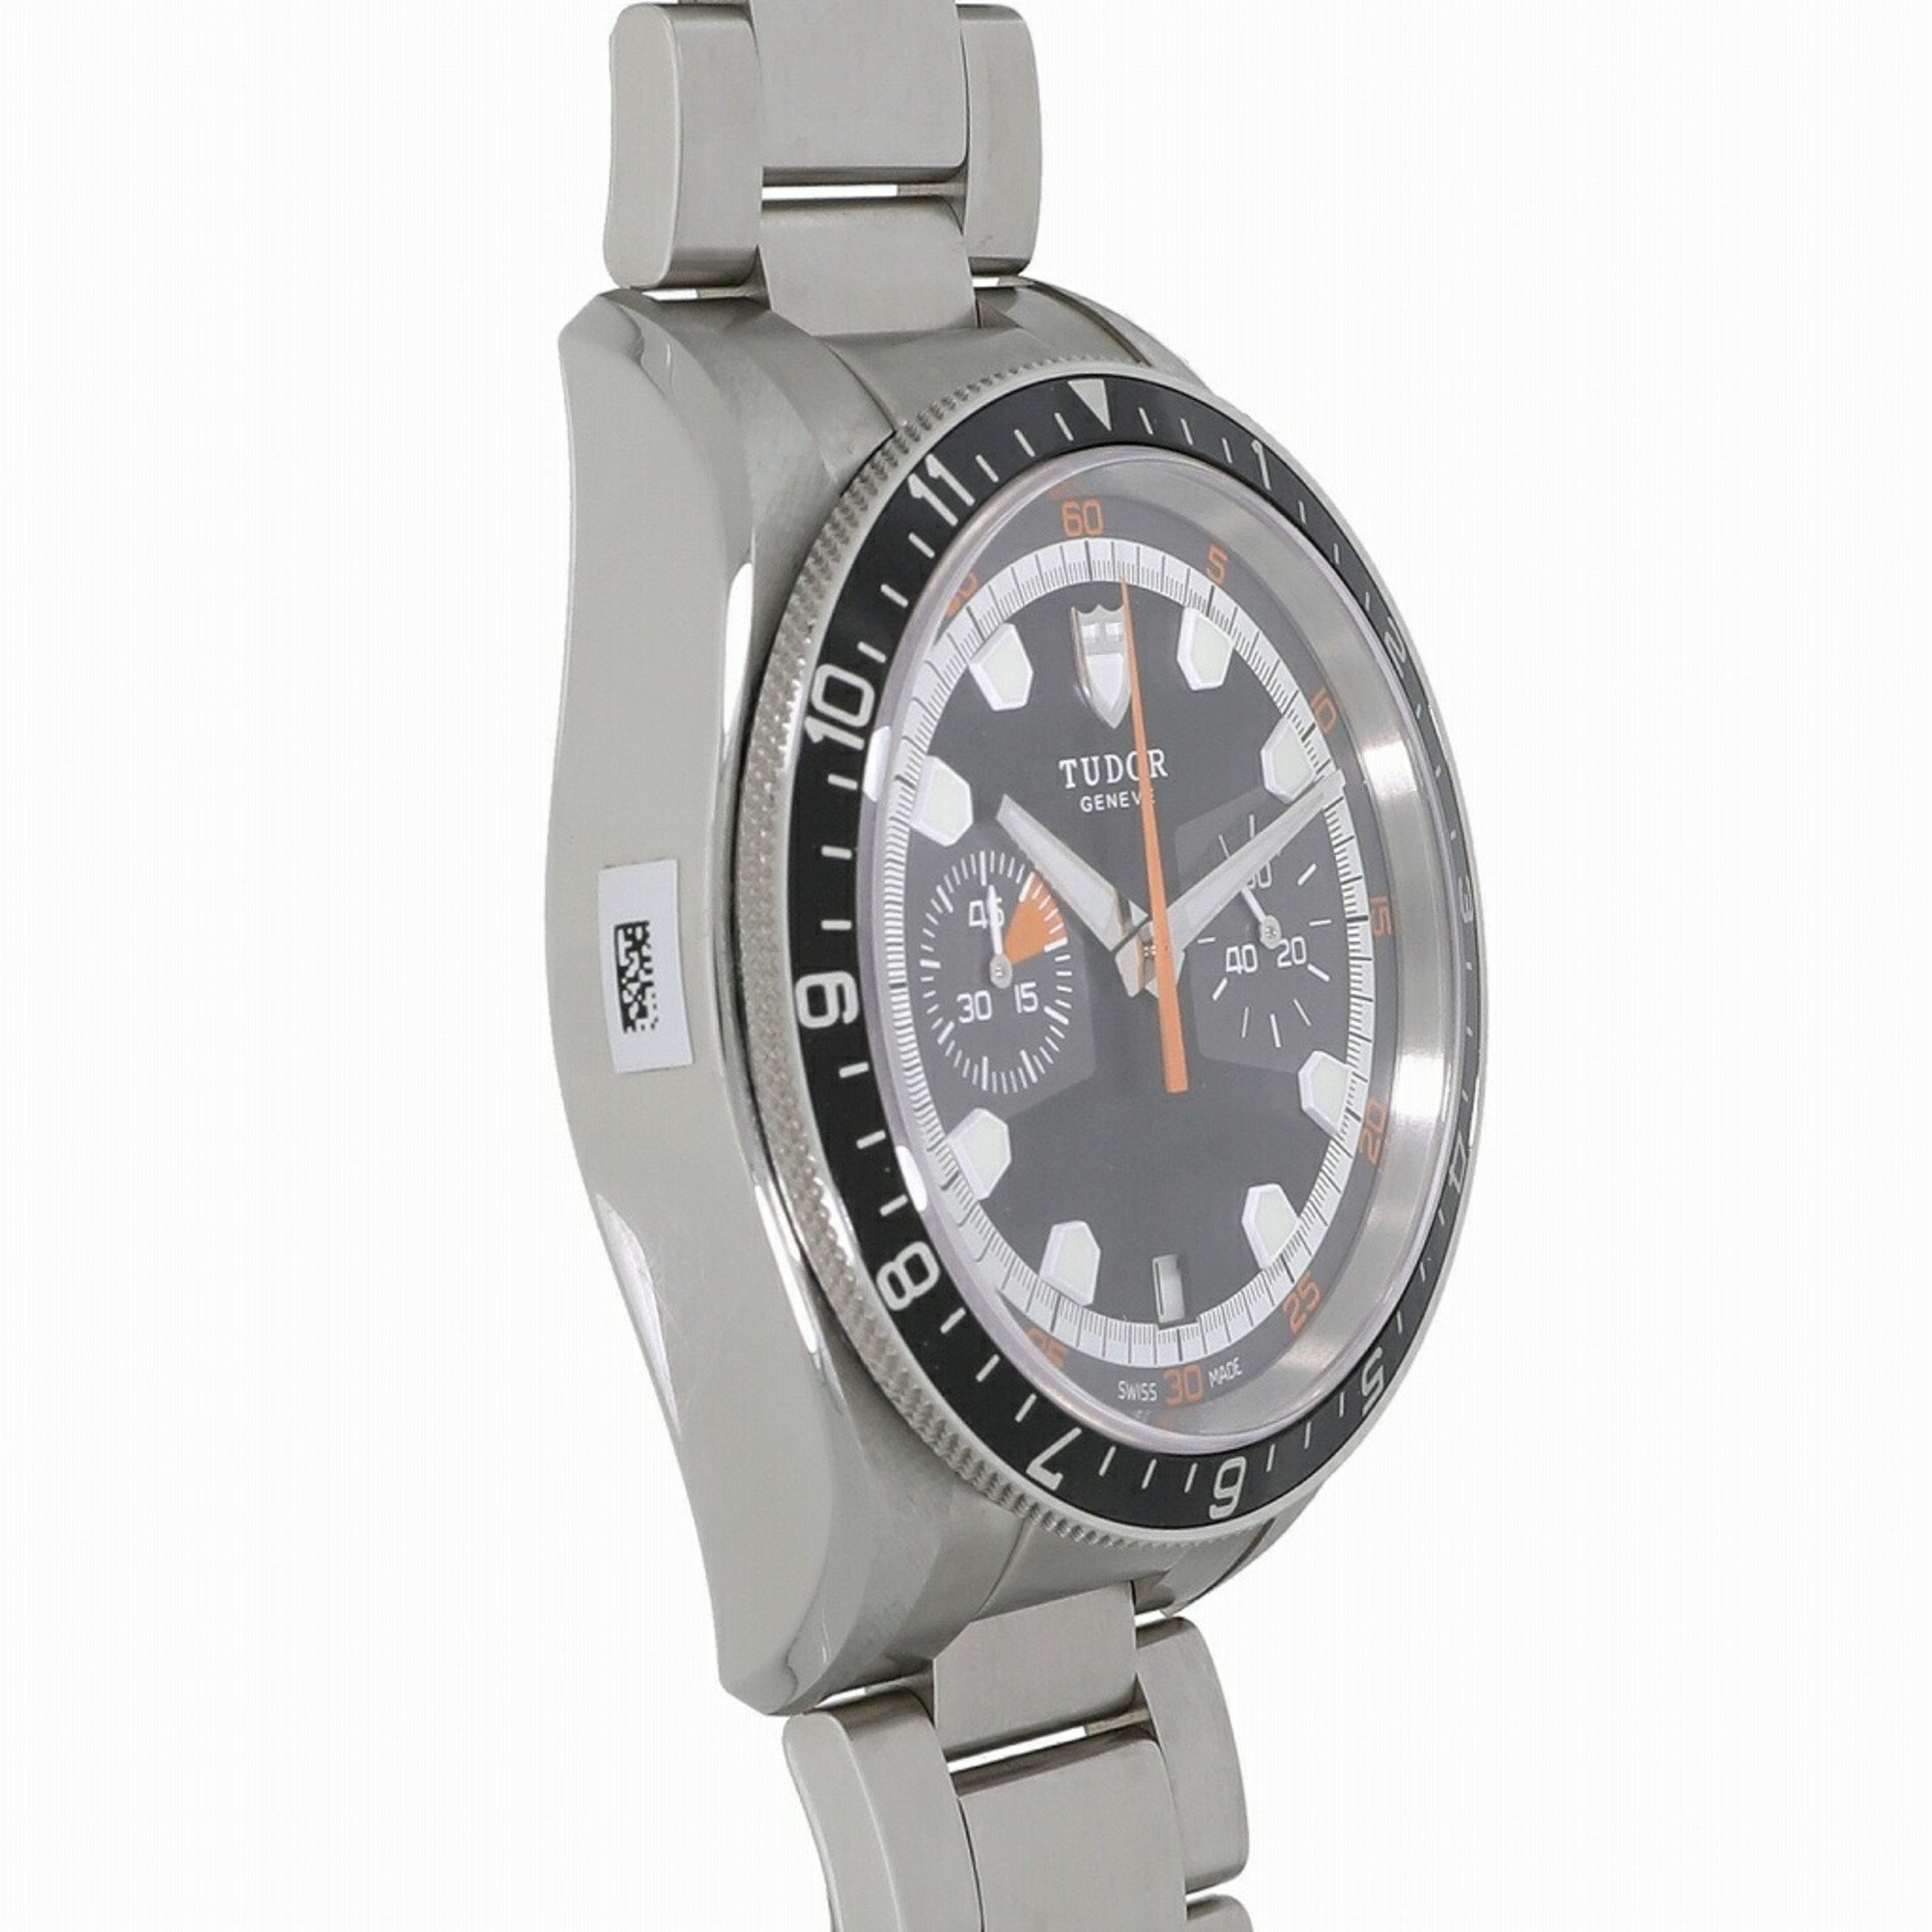 Tudor Heritage Chrono M70330N-0005 Men's Watch